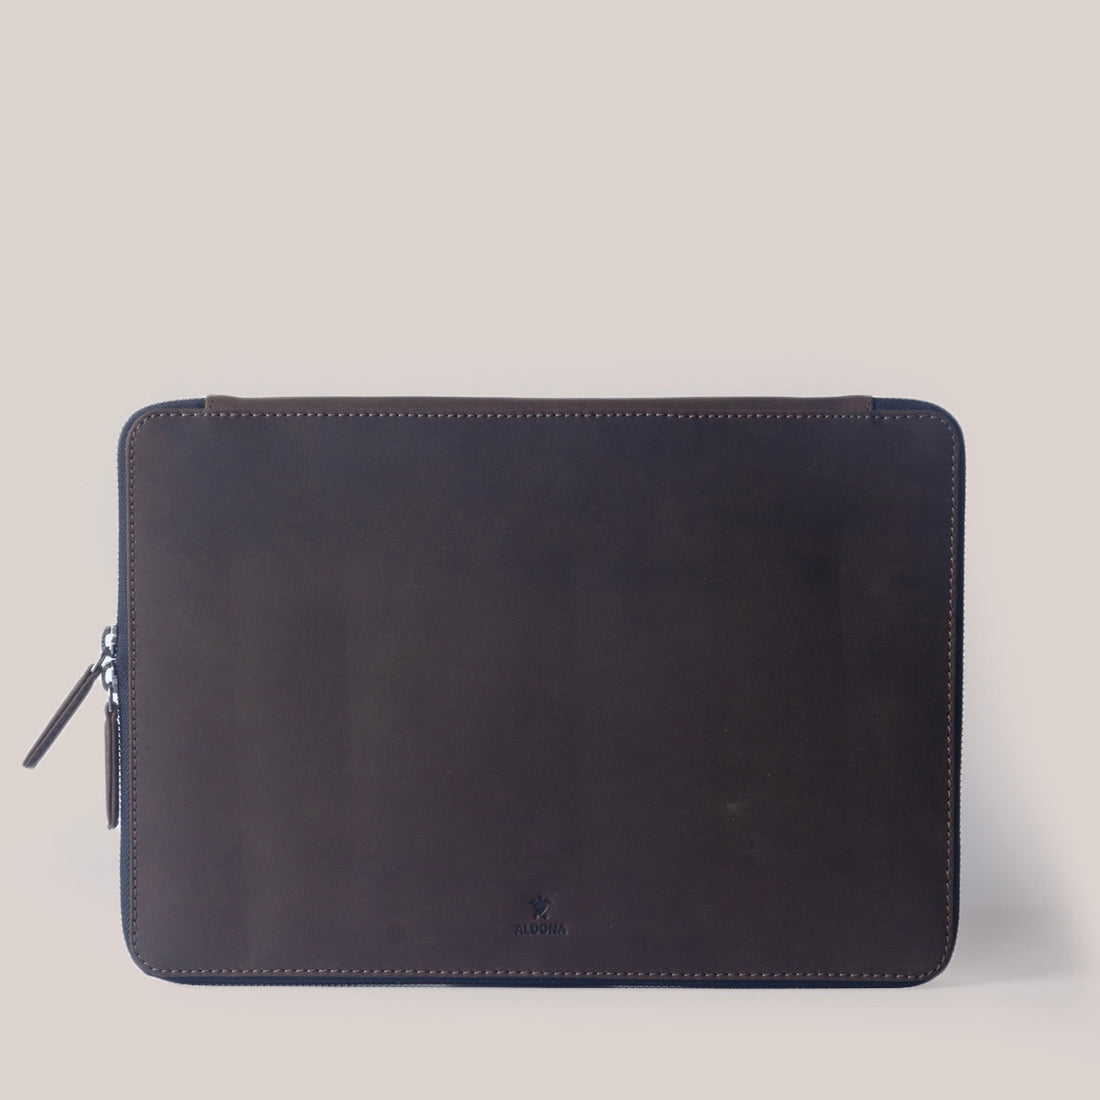 DELL XPS Zippered Laptop Case - Felt and Tan Crunch